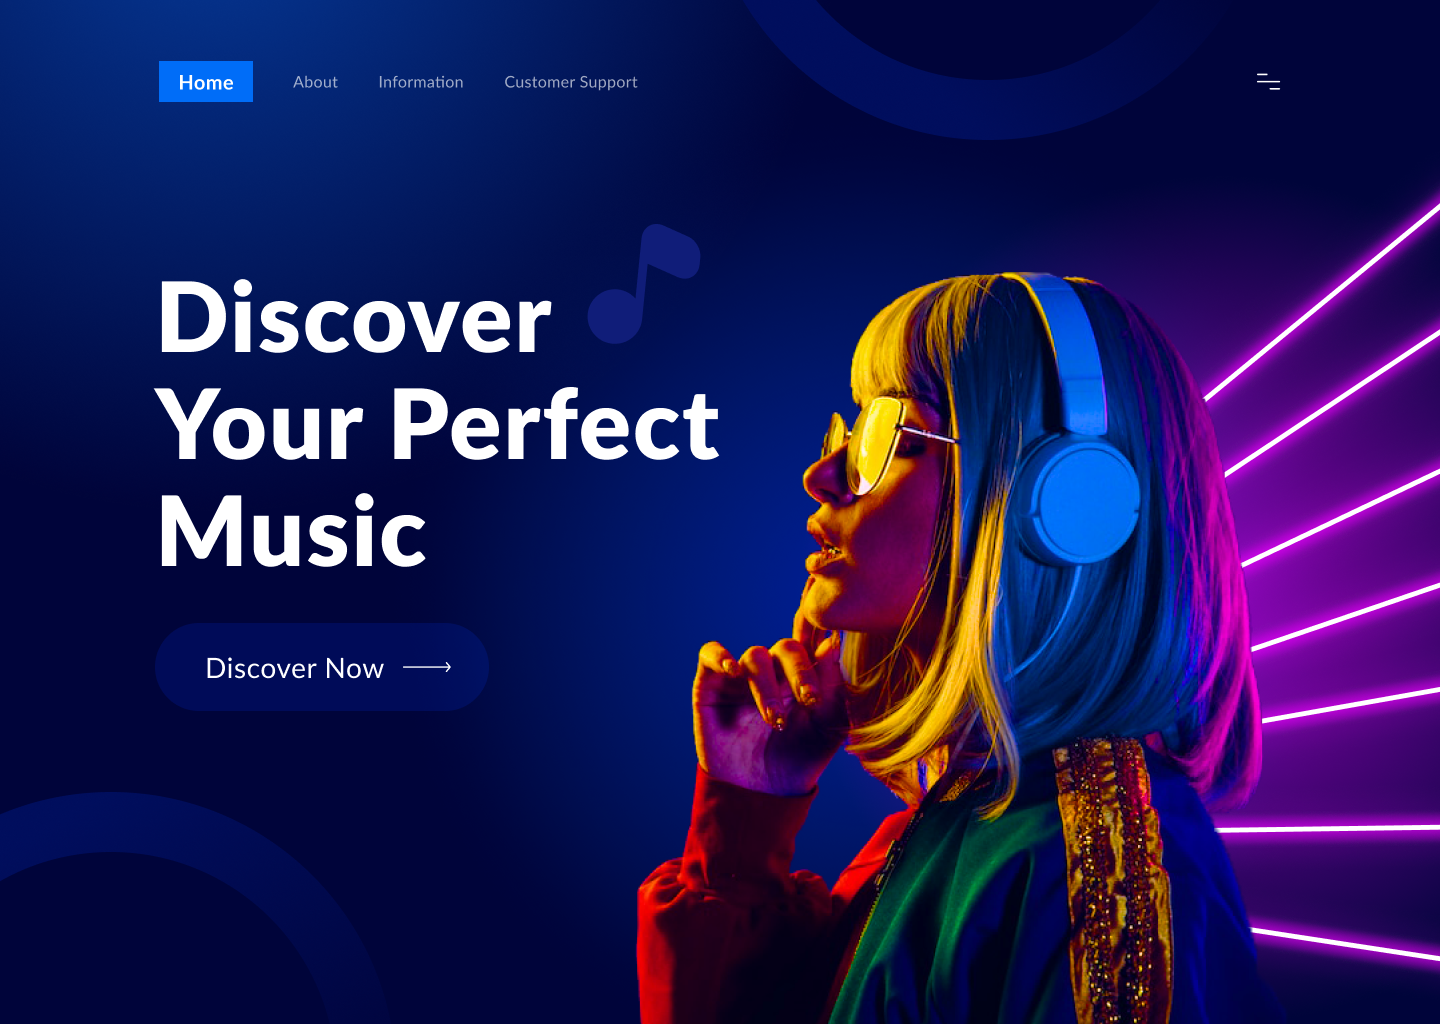 Perfect Music - Web page by Reshma Kotadiya on Dribbble